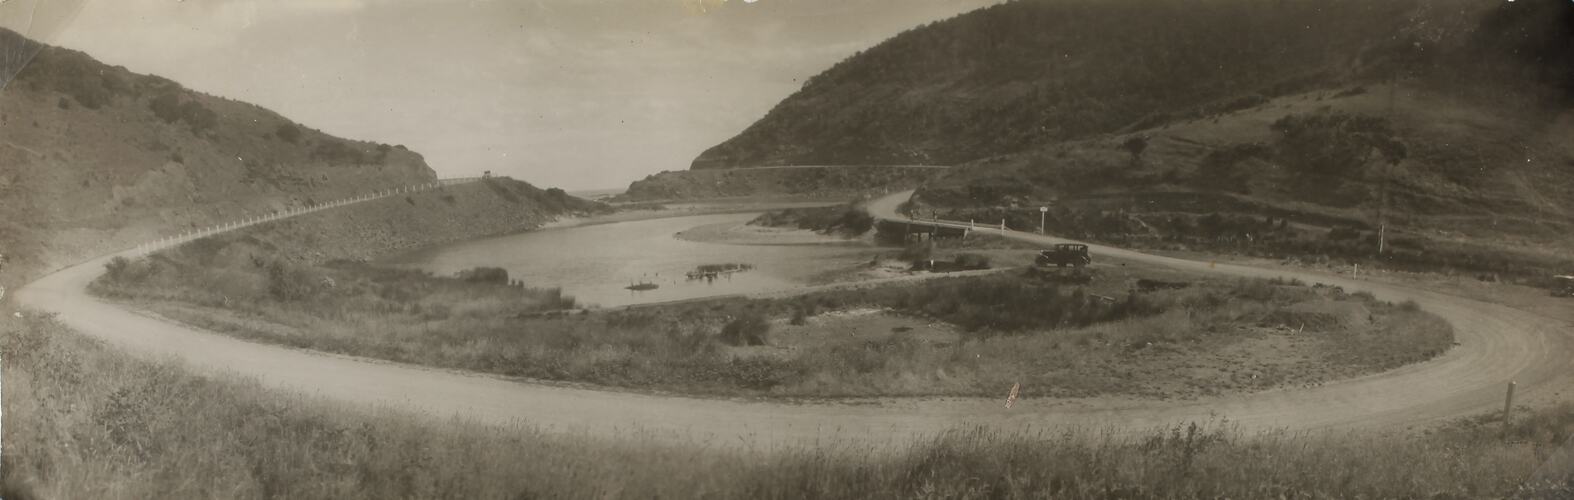 Photograph - Coastal Landscape, The Great Ocean Road, St George River, Lorne District, Victoria, 1930s